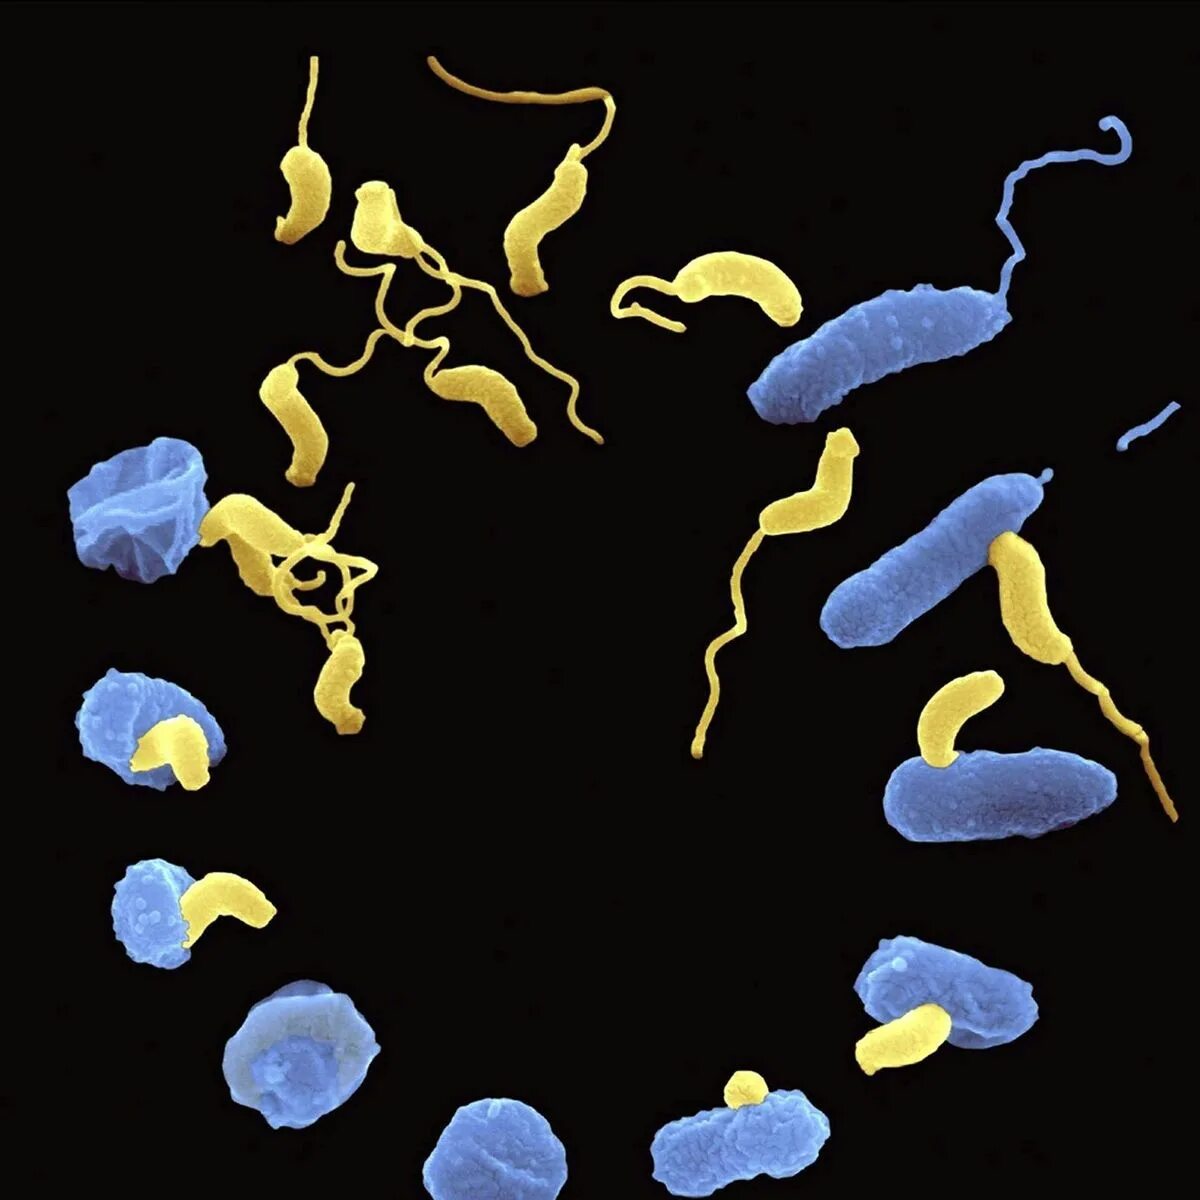 Плотоядная бактерия. Bdellovibrio bacteriovorus. Bdellovibrio микробиология. Хищничество бактерий.